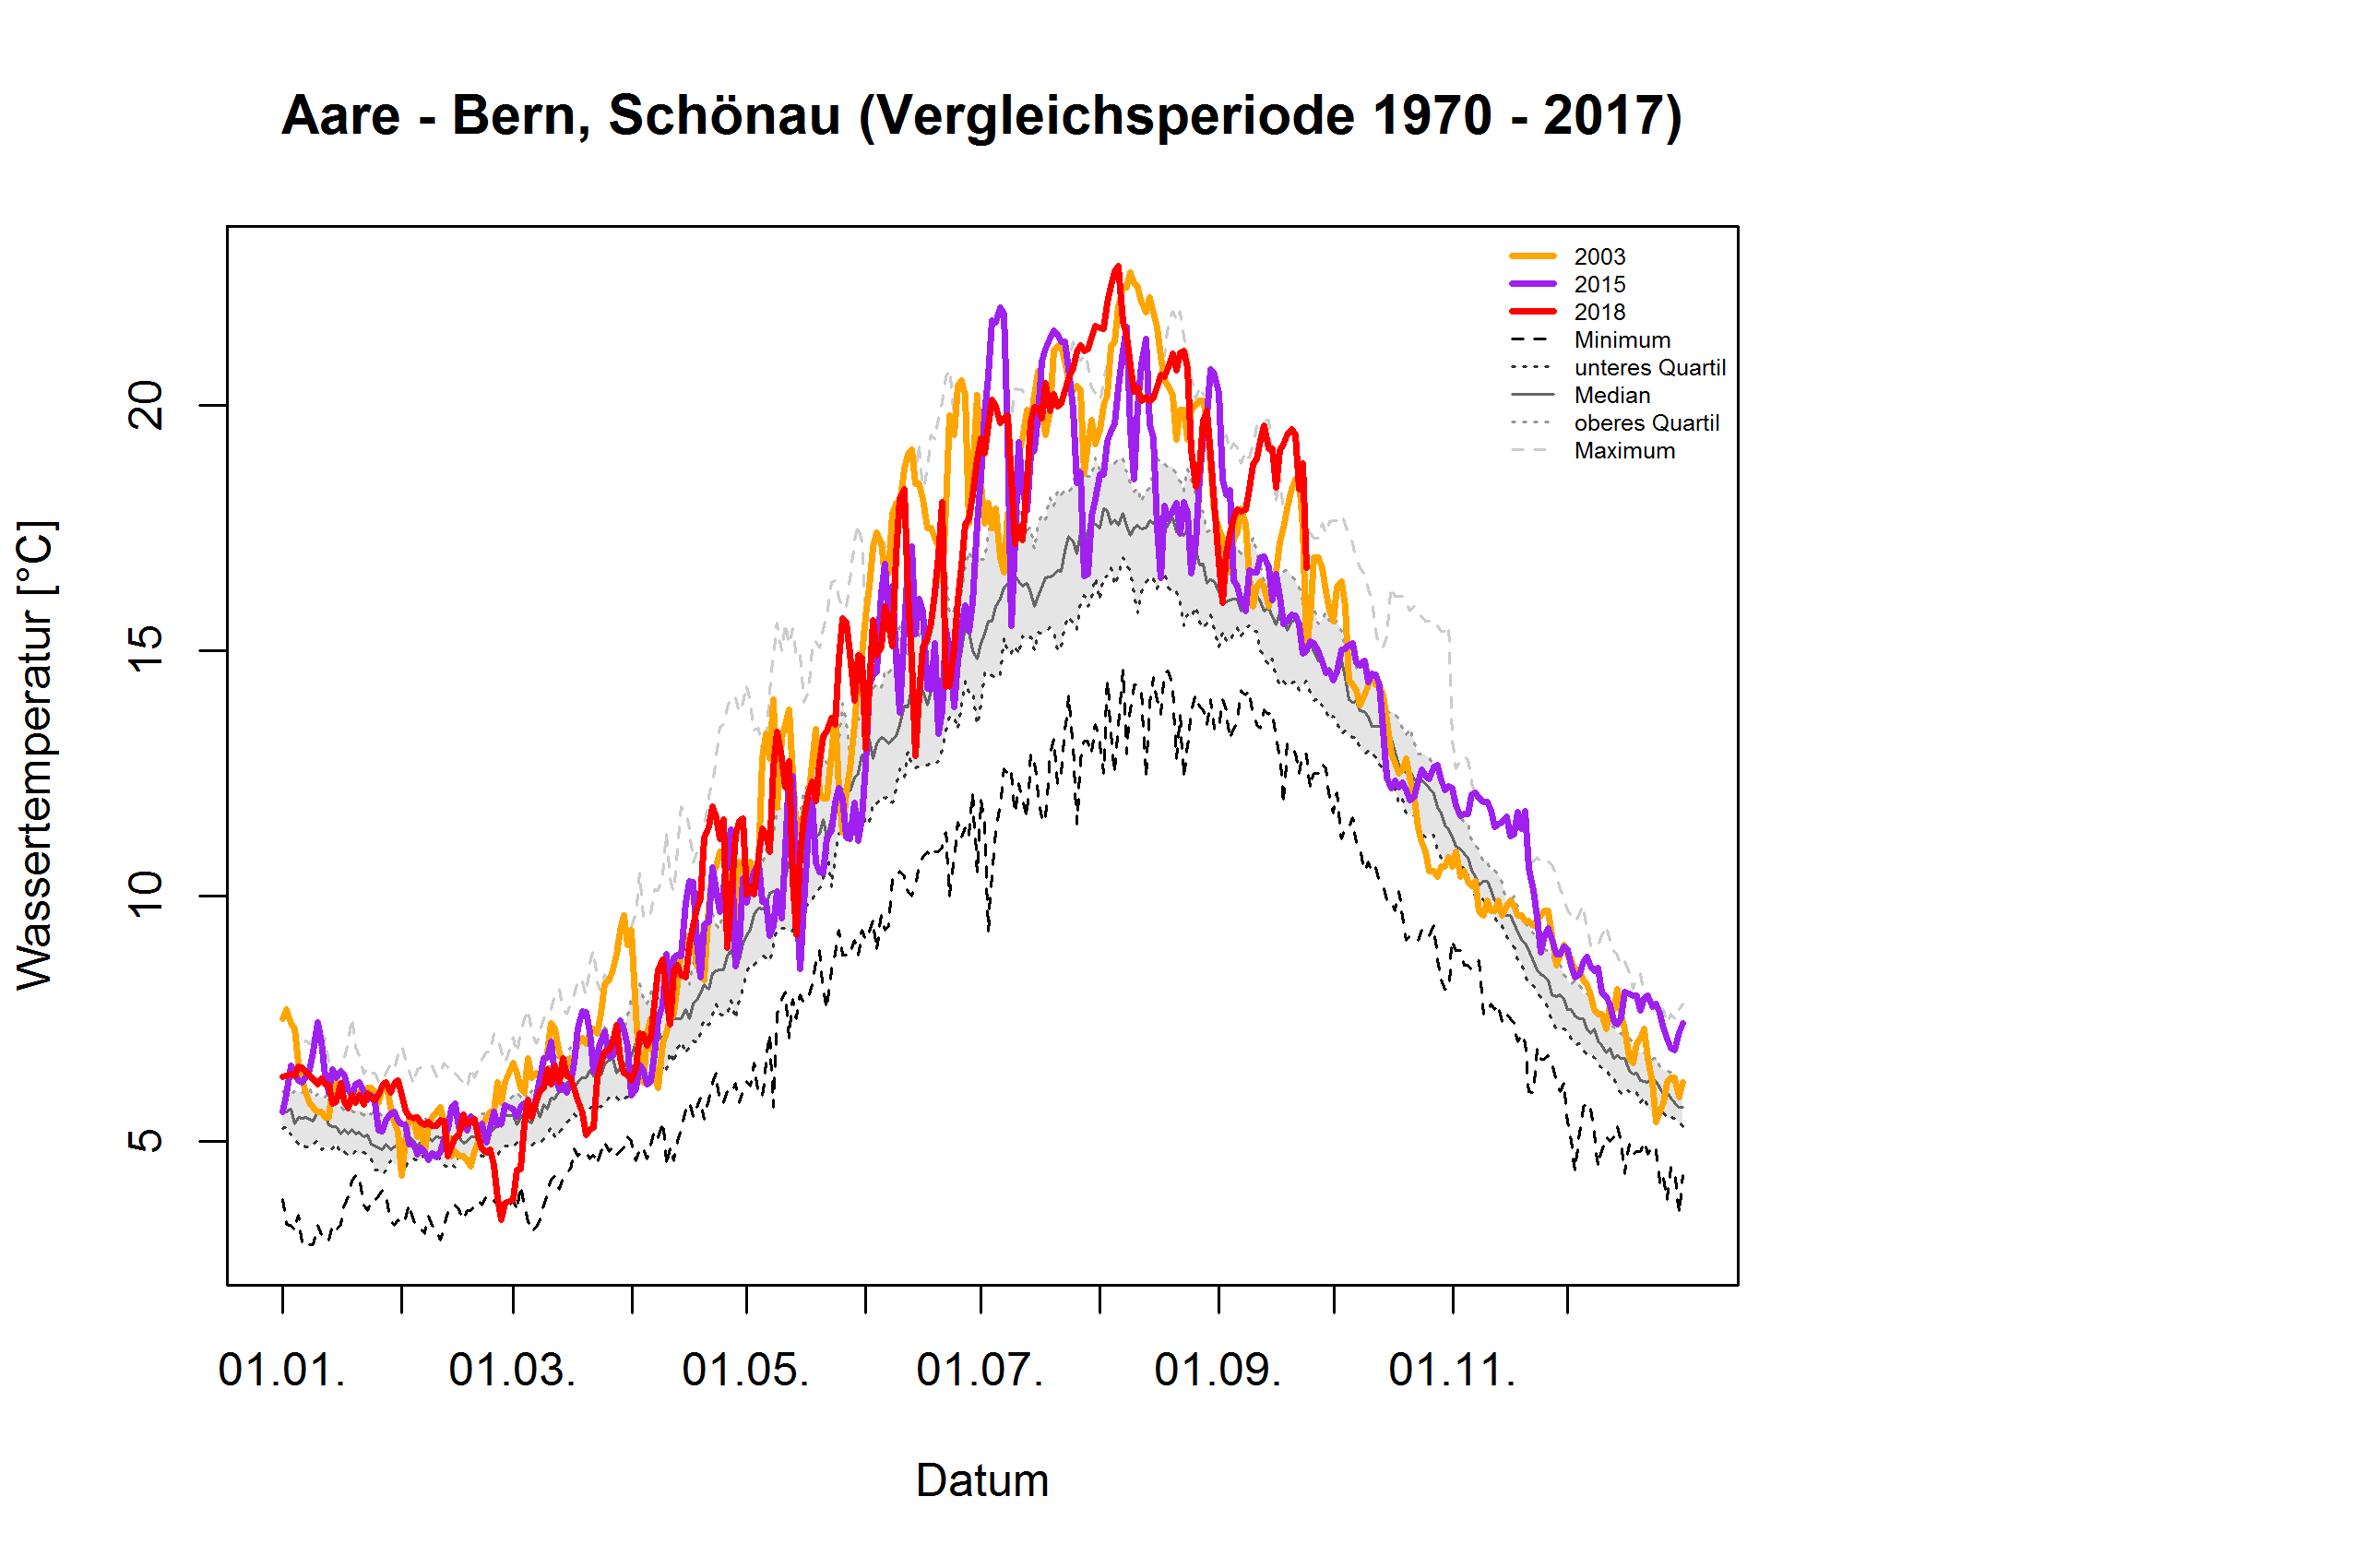 Aare - Bern: Vergleichsperiode 1970 - 2017